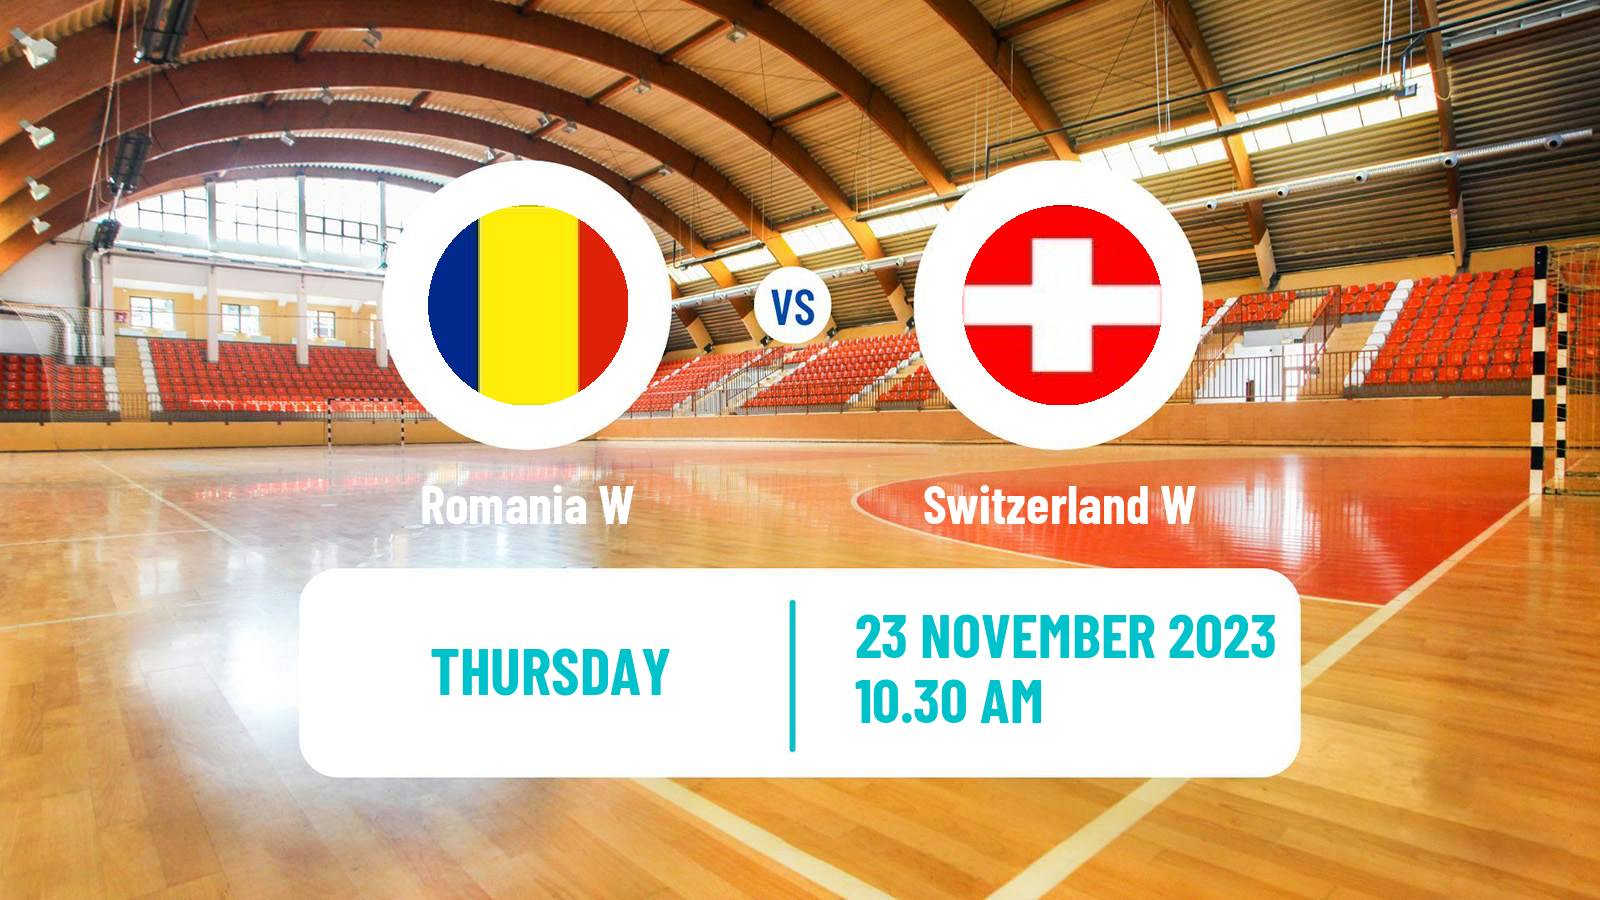 Handball Friendly International Handball Women Romania W - Switzerland W